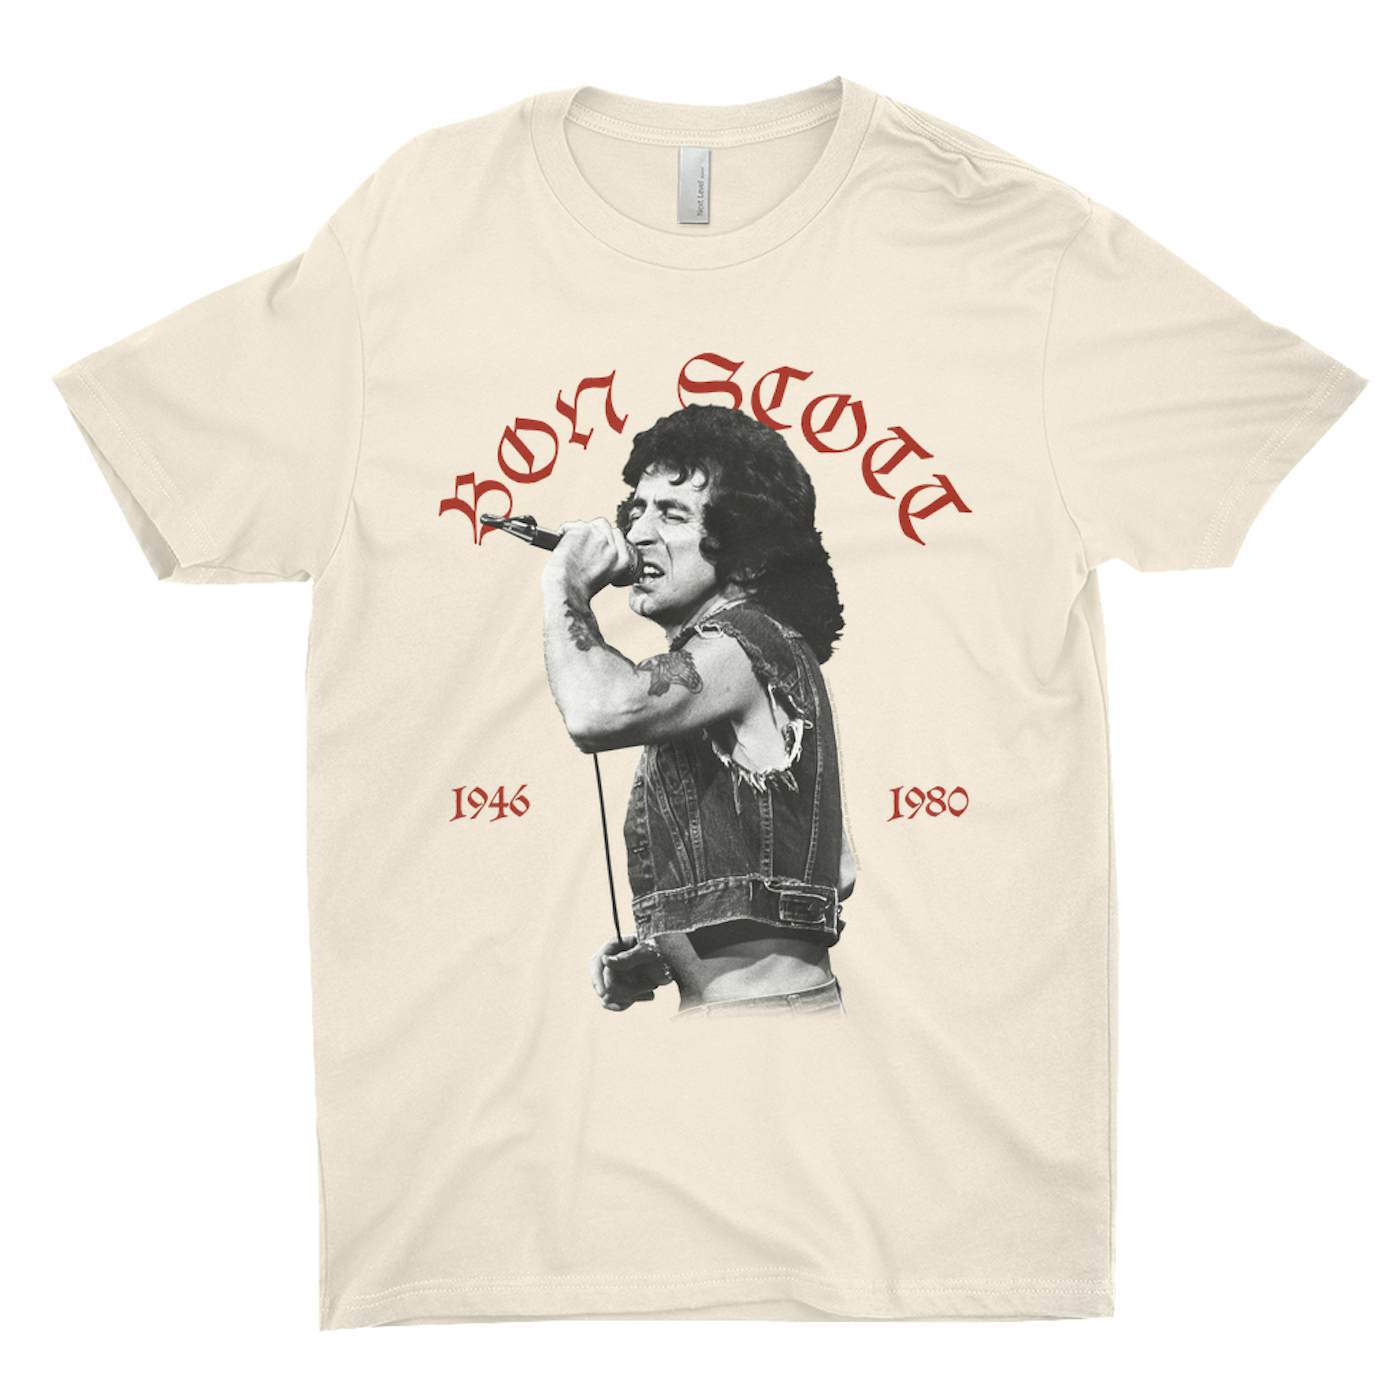 Bon Scott T-Shirt | Old English 1946-1980 Bon Scott Shirt